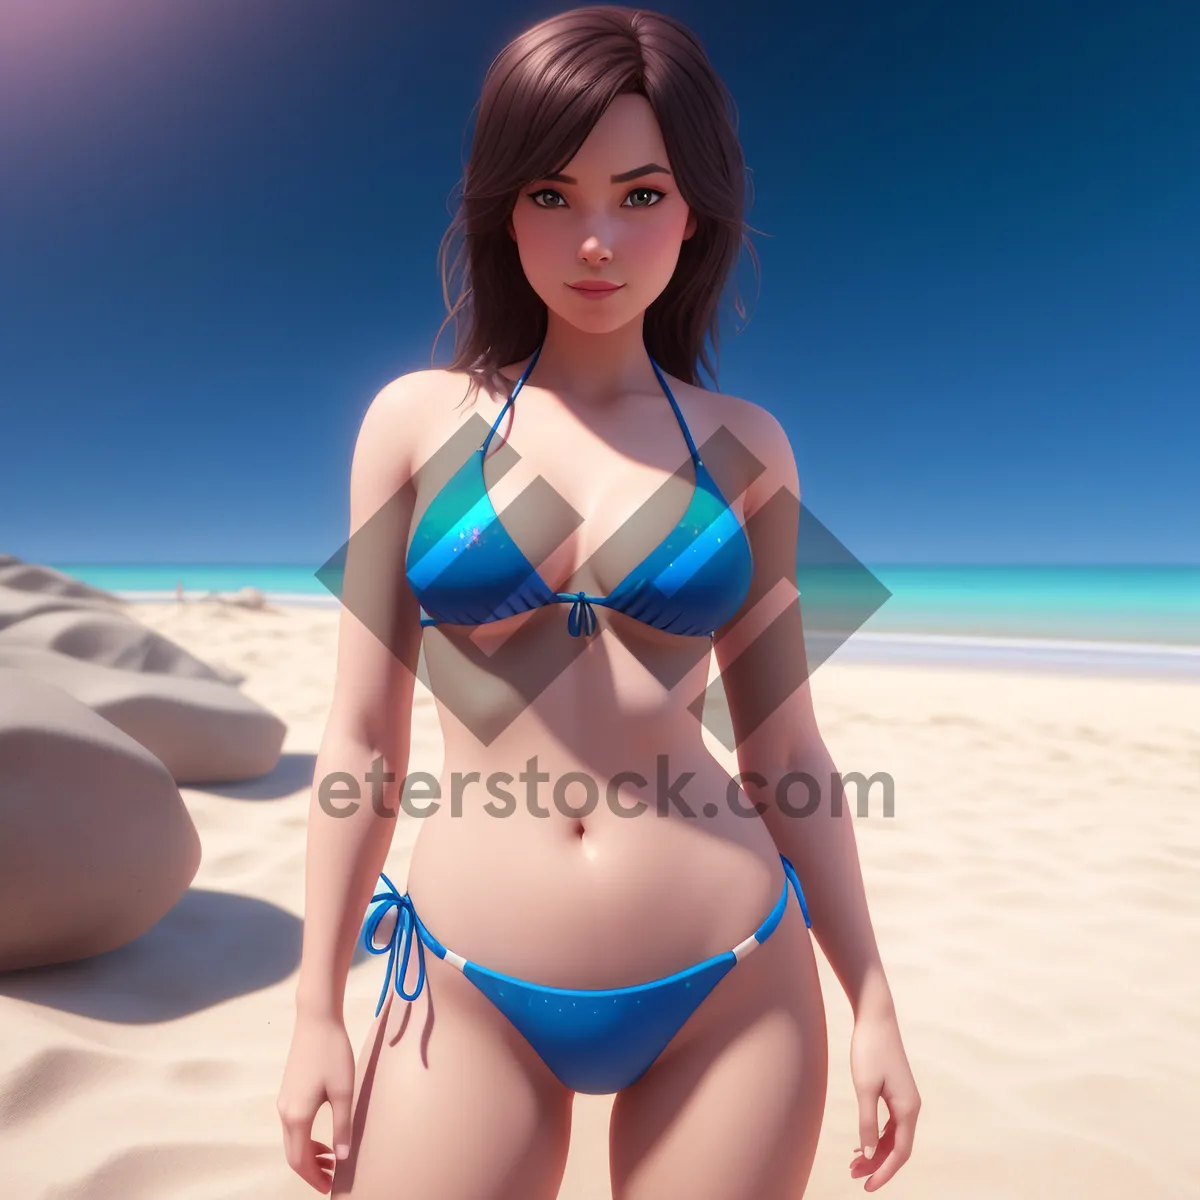 Picture of Sexy Beachwear: Attractive Bikini Swimsuit on Model